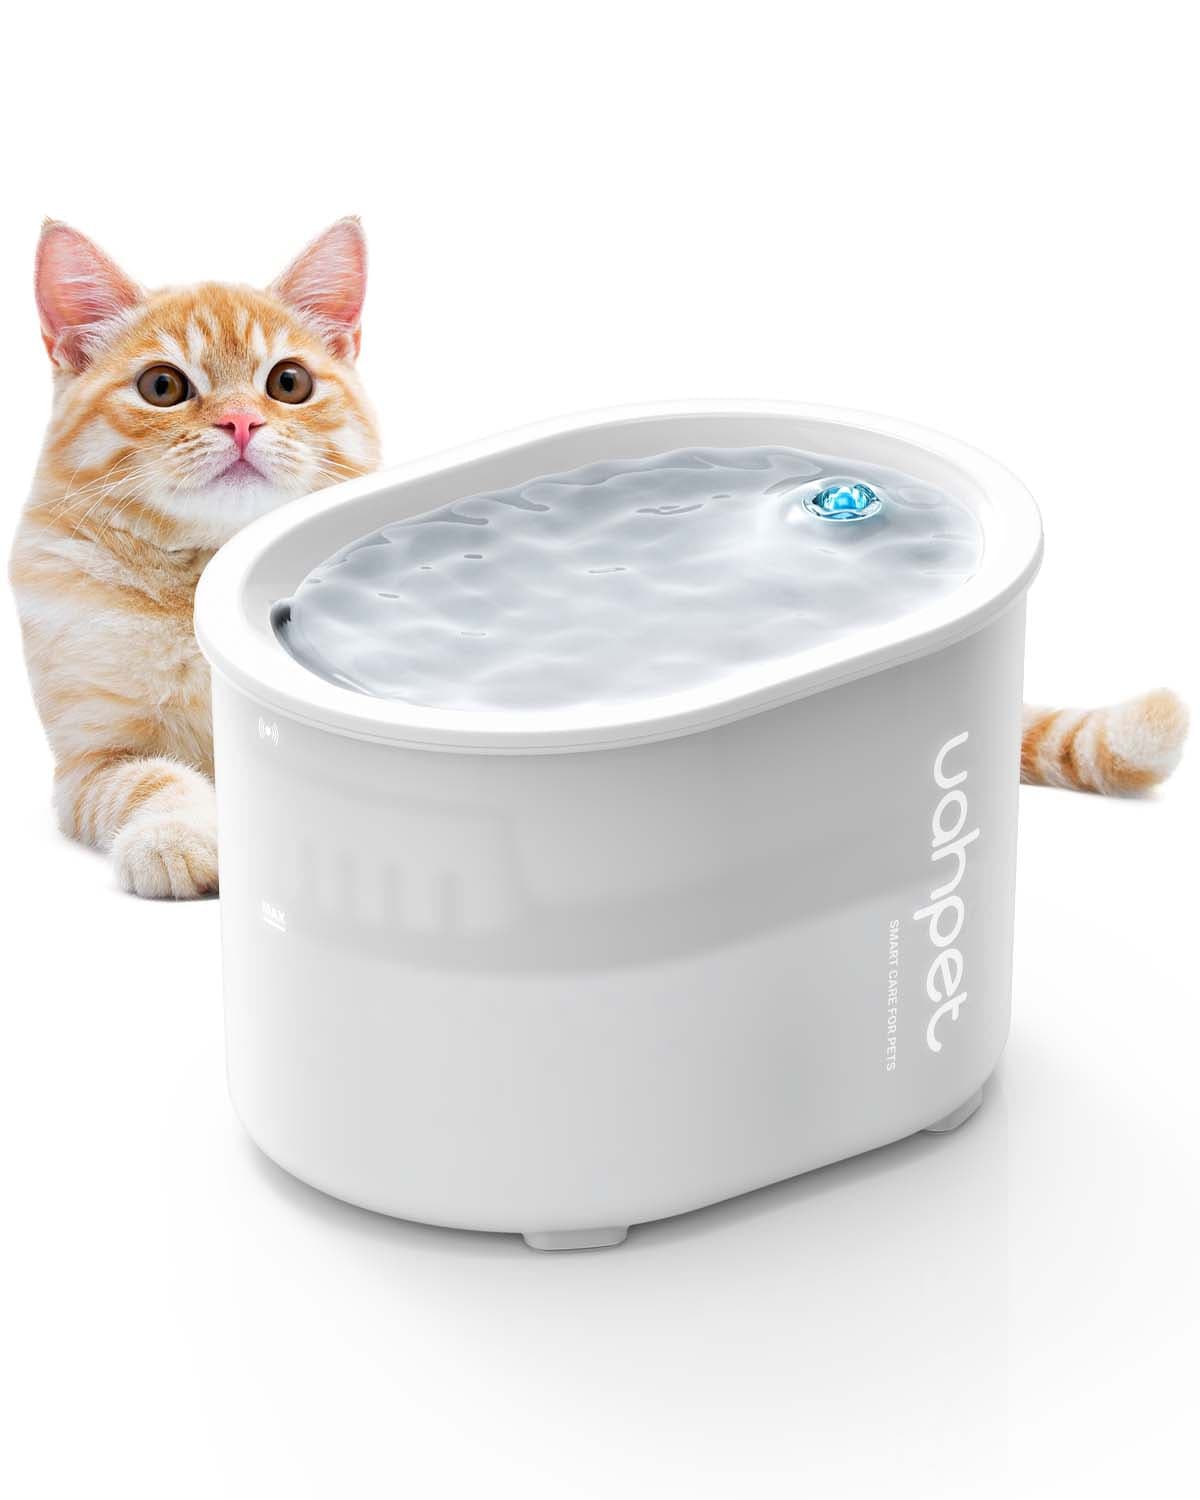 Uahpet GLOW Wireless Cat Water Fountain